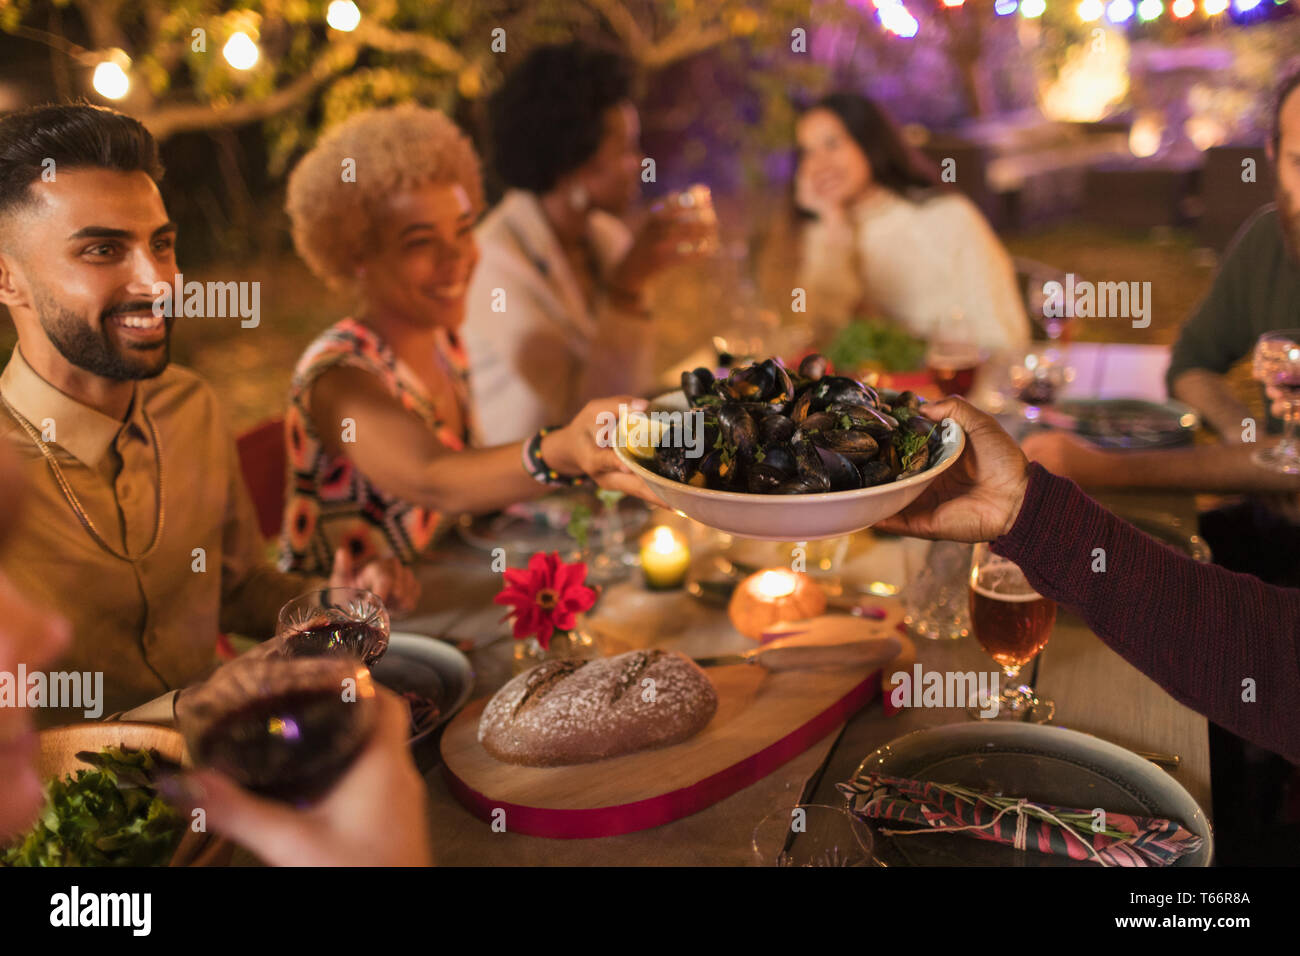 Friends passing mussels, enjoying dinner garden party Stock Photo